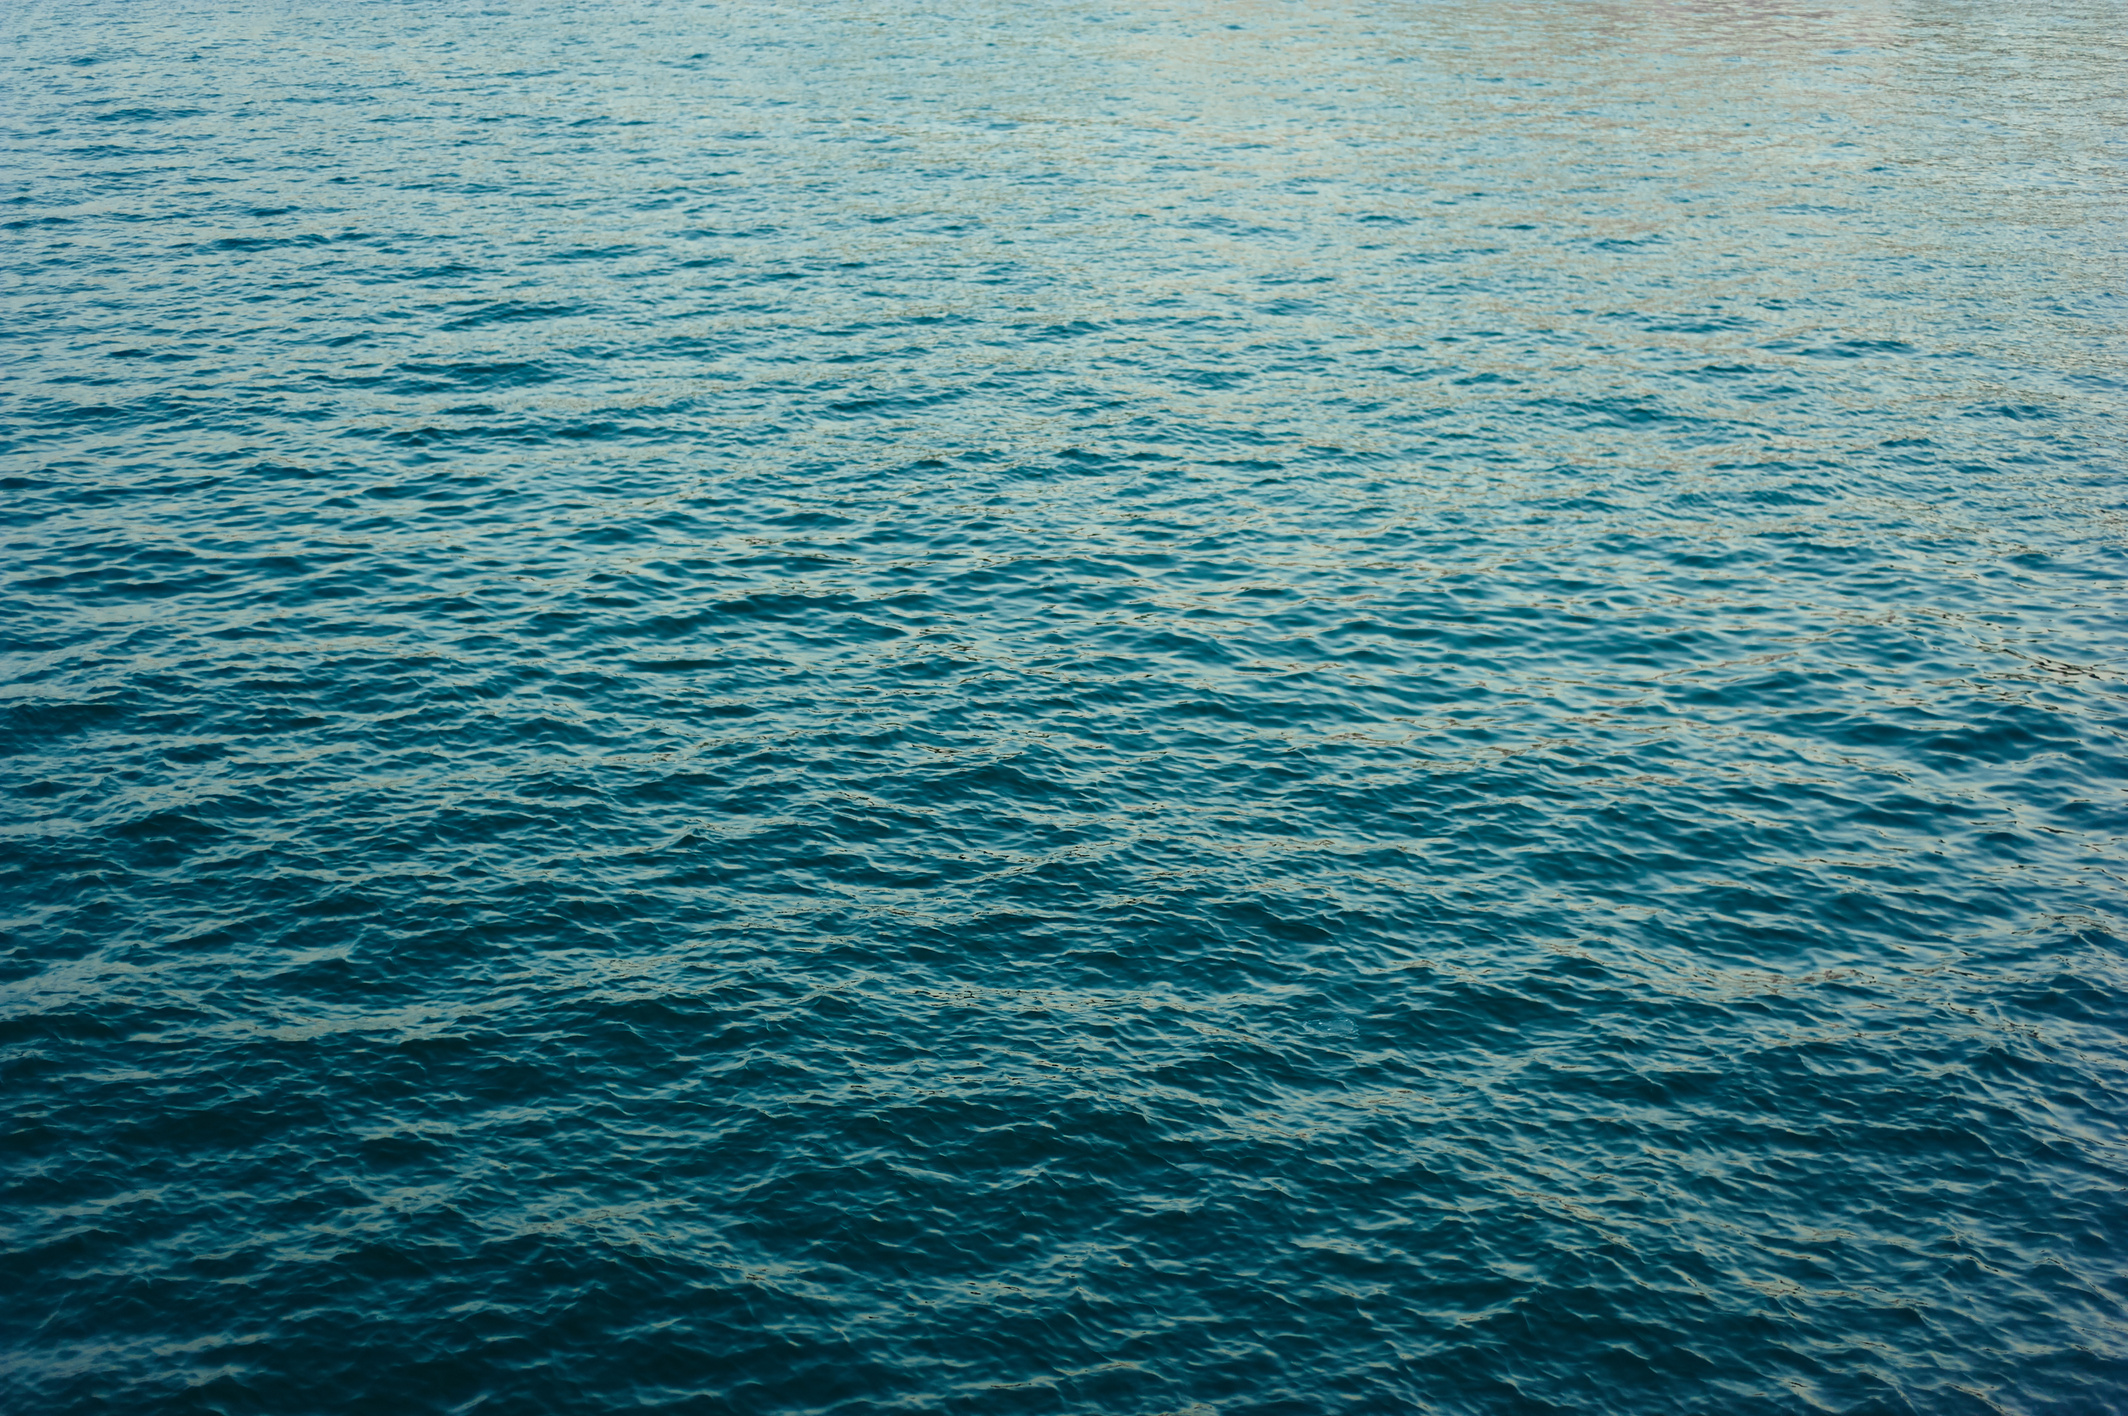 deep blue sea water backround. waves at ocean surface